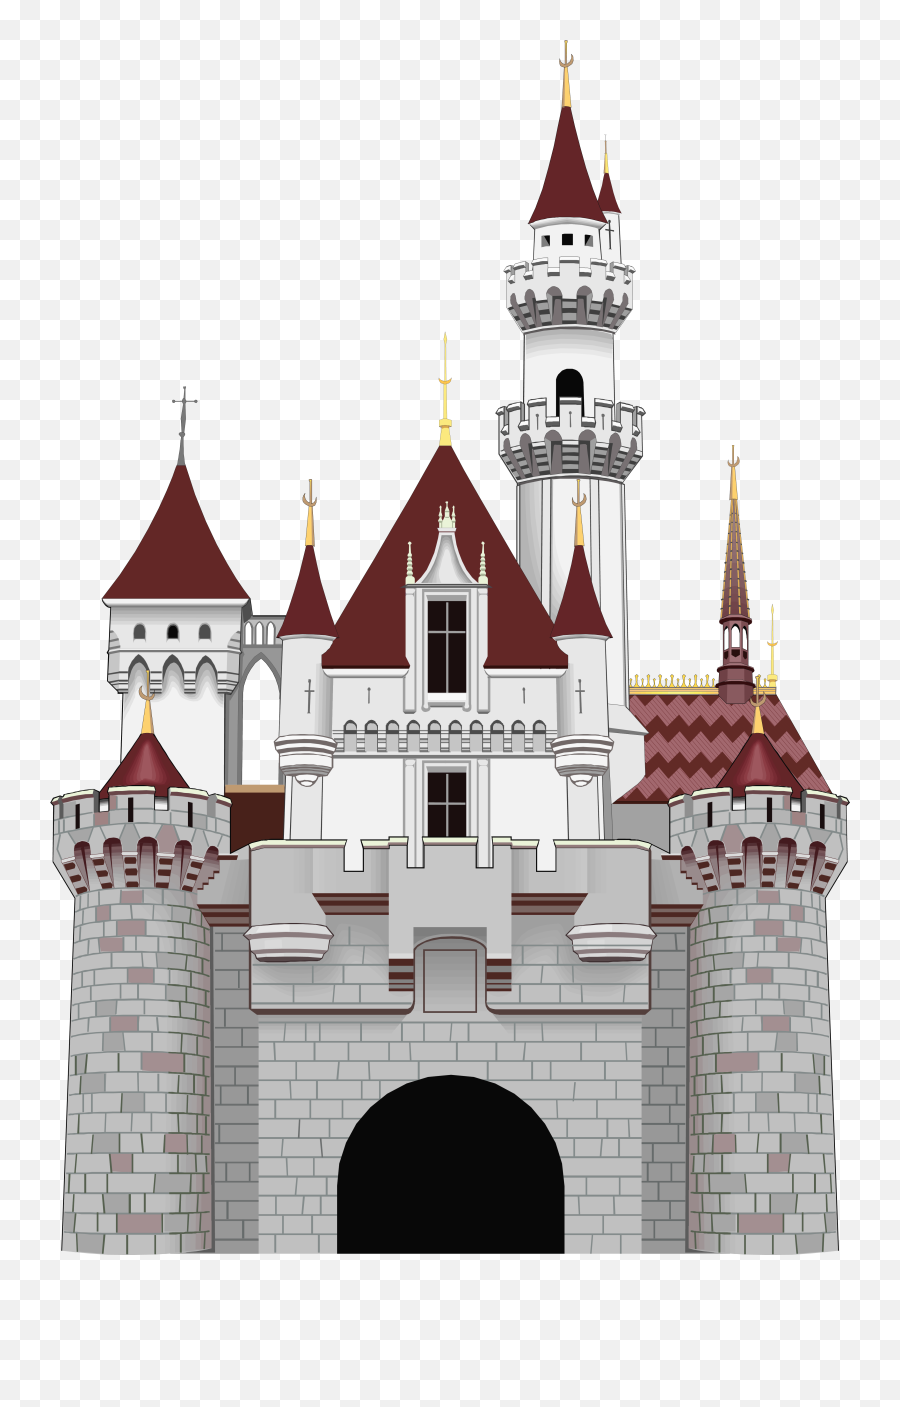 Download Free Png Castle Clipart - Jean Michel Jarre Deserted Palace,Castle Clipart Png